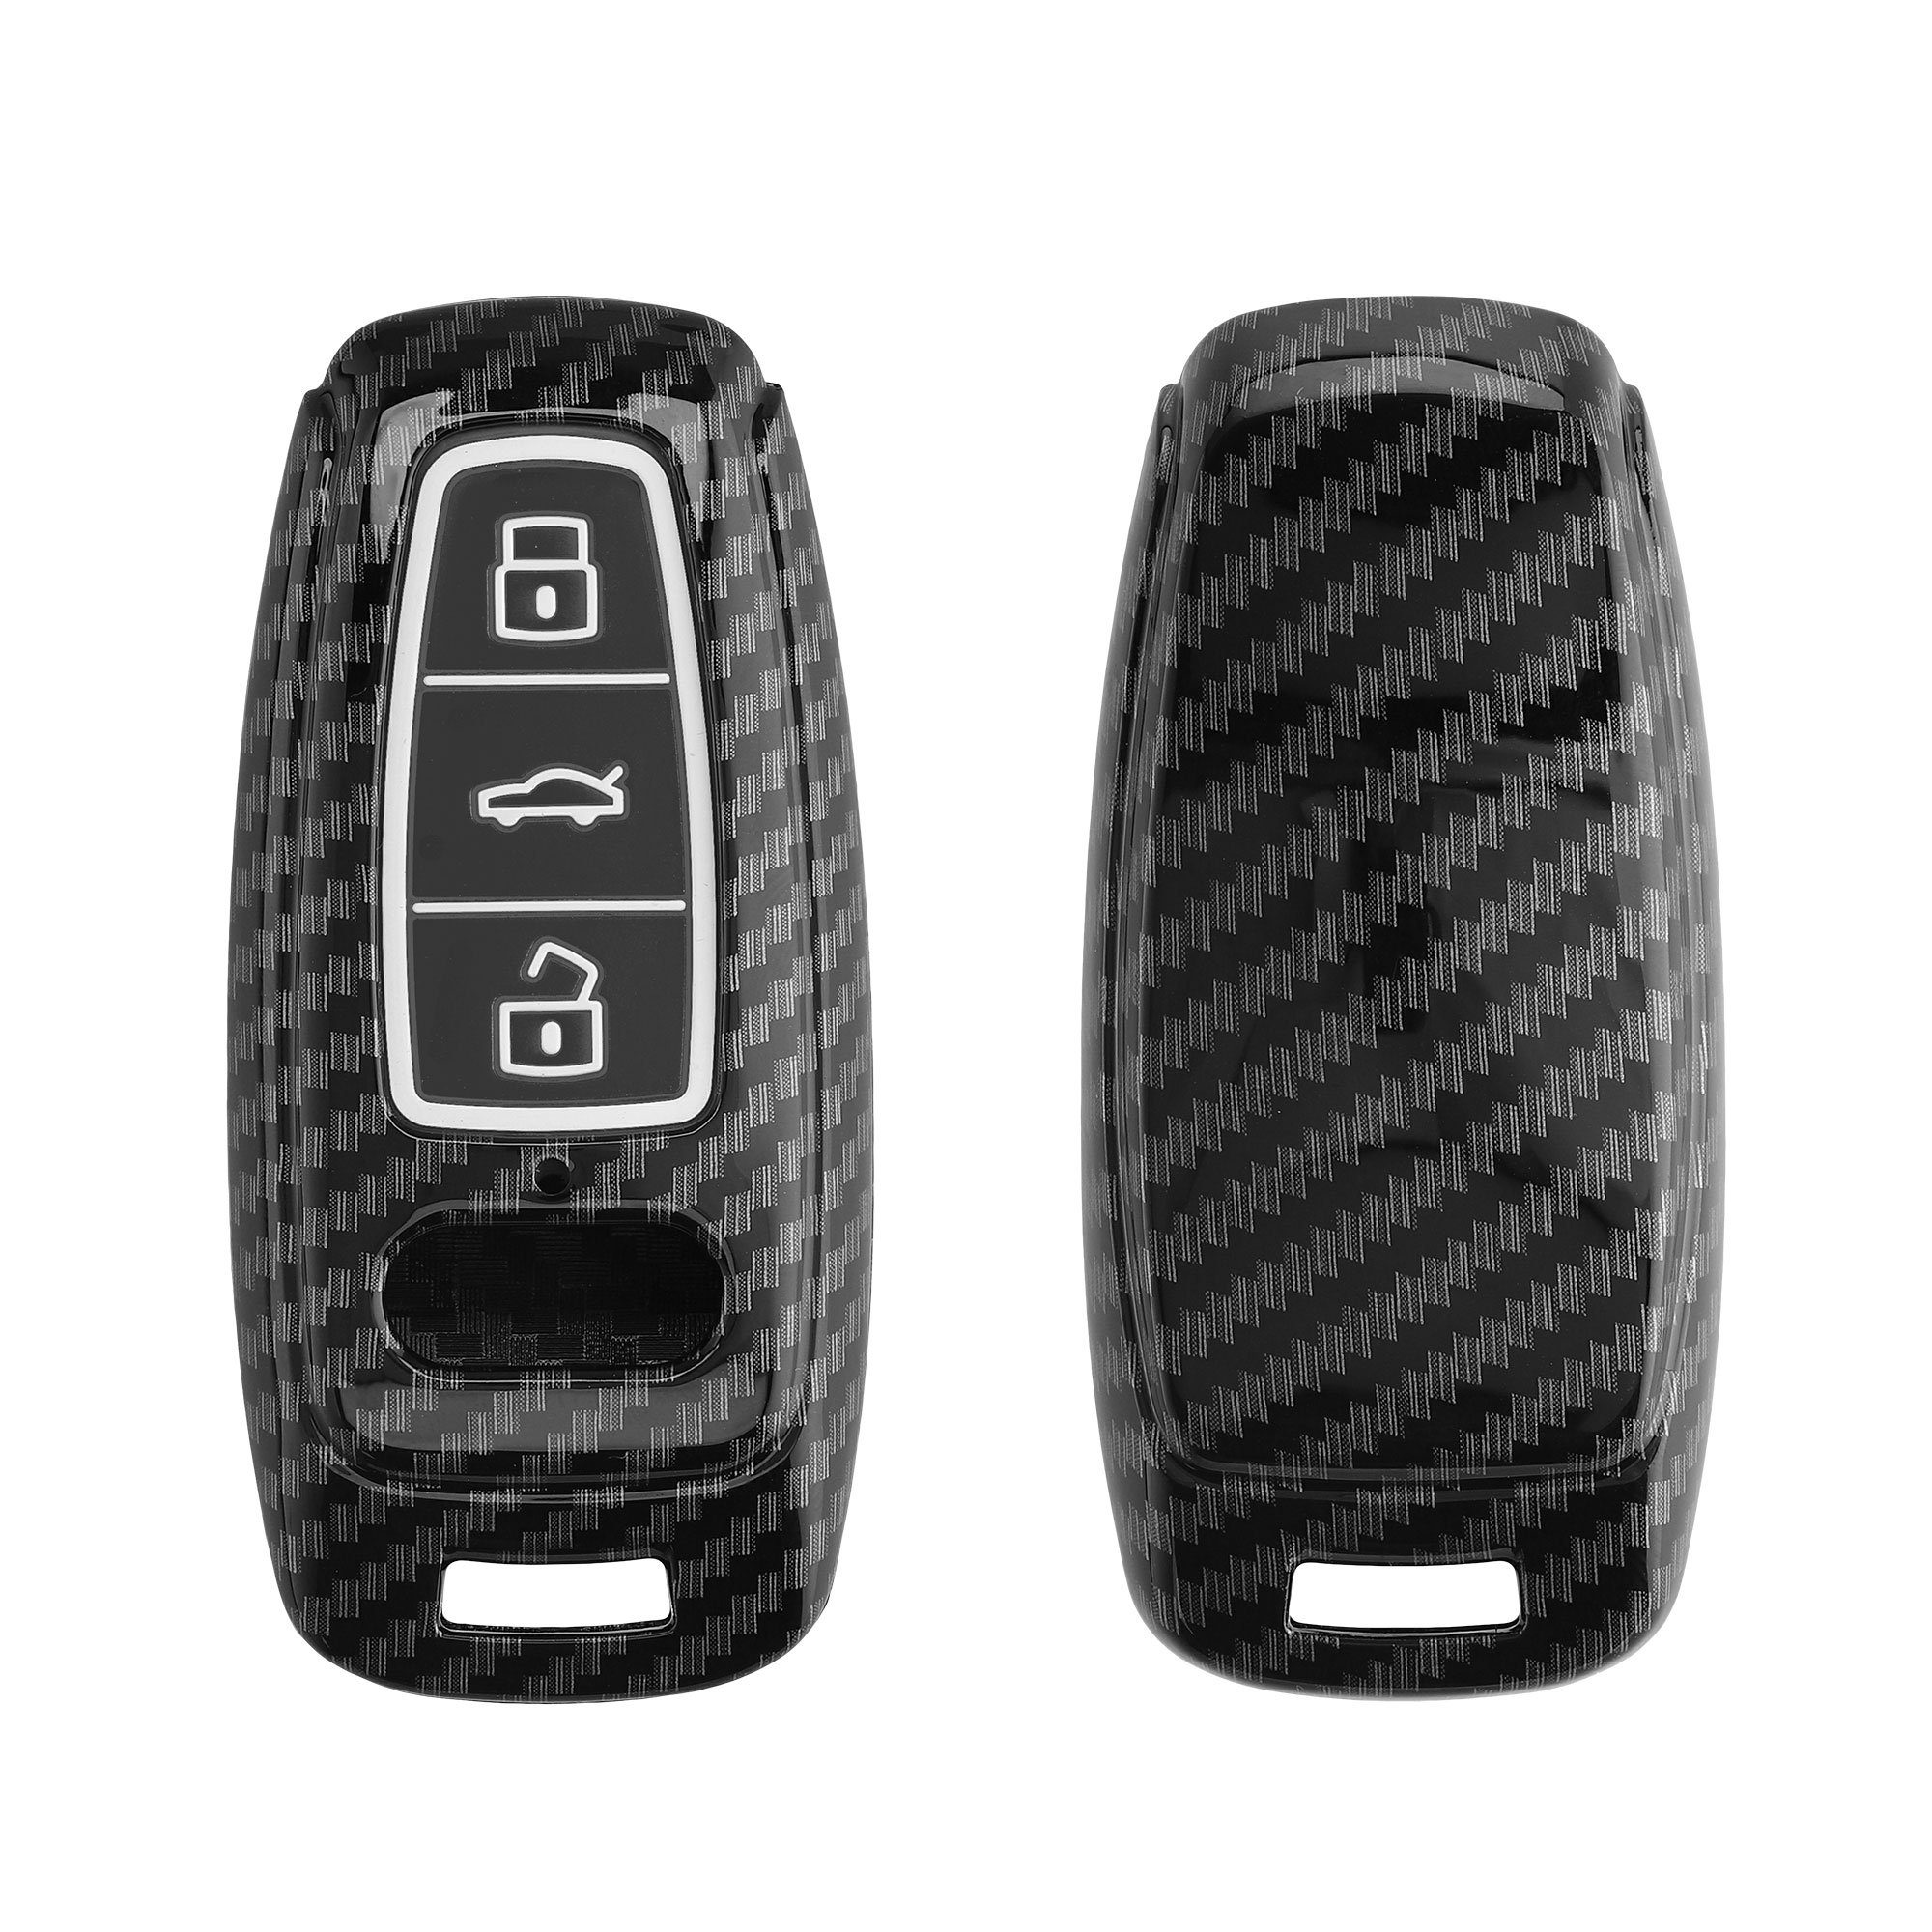 kwmobile Schlüsseltasche Autoschlüssel Hülle für Audi A6 A7 A8 Q7 Q8, Hardcover Schutzhülle - Schlüsselhülle Cover Case Schwarz | Schlüsseltaschen